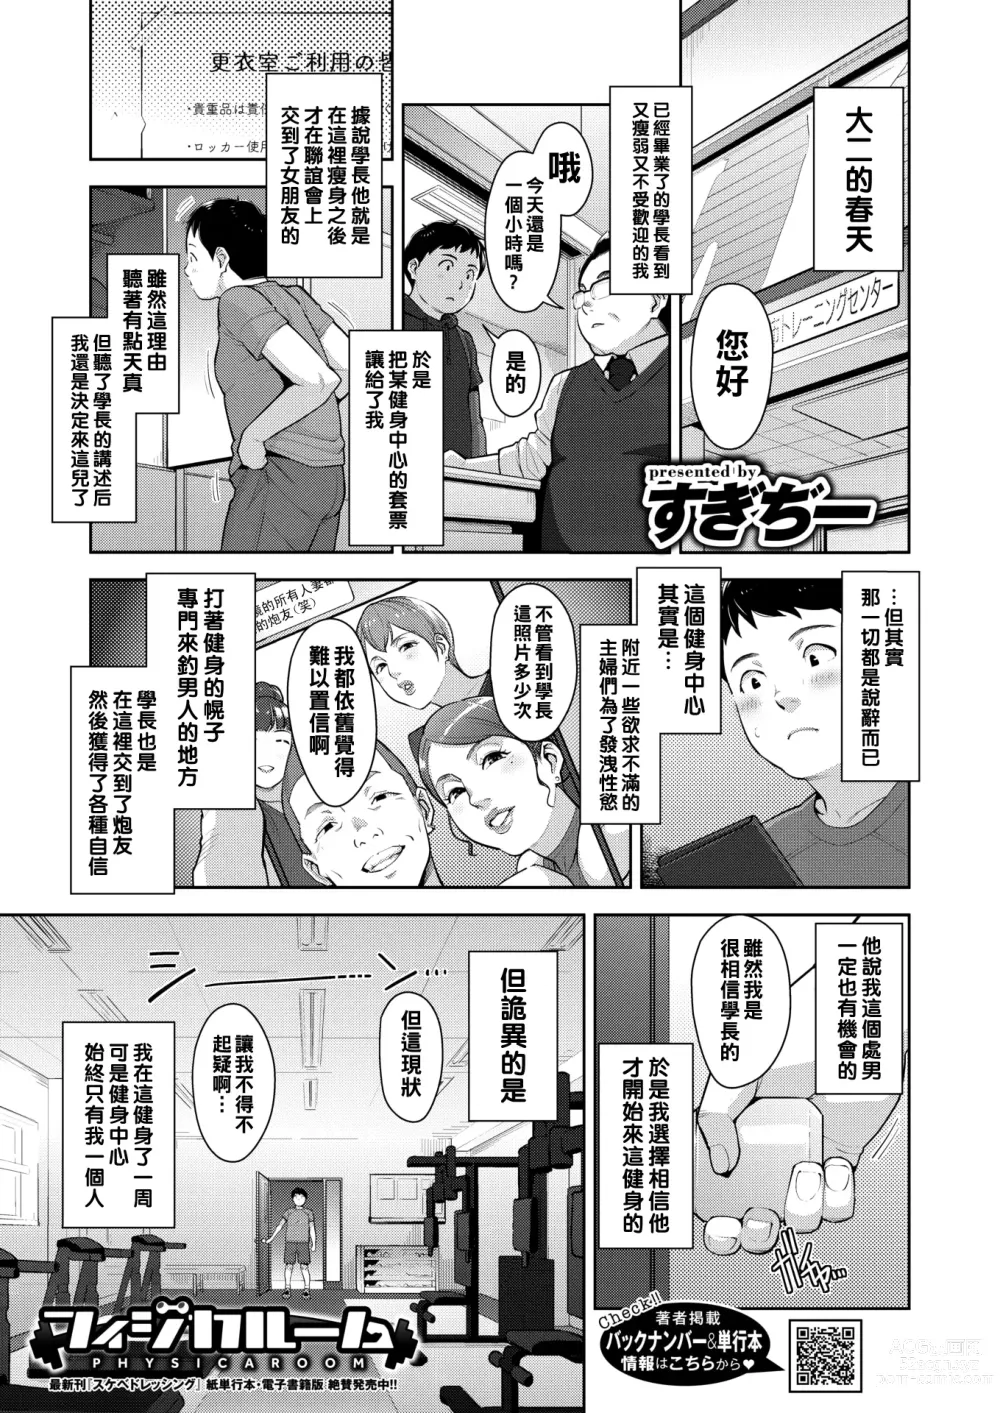 Page 1 of manga PHYSICAROOM